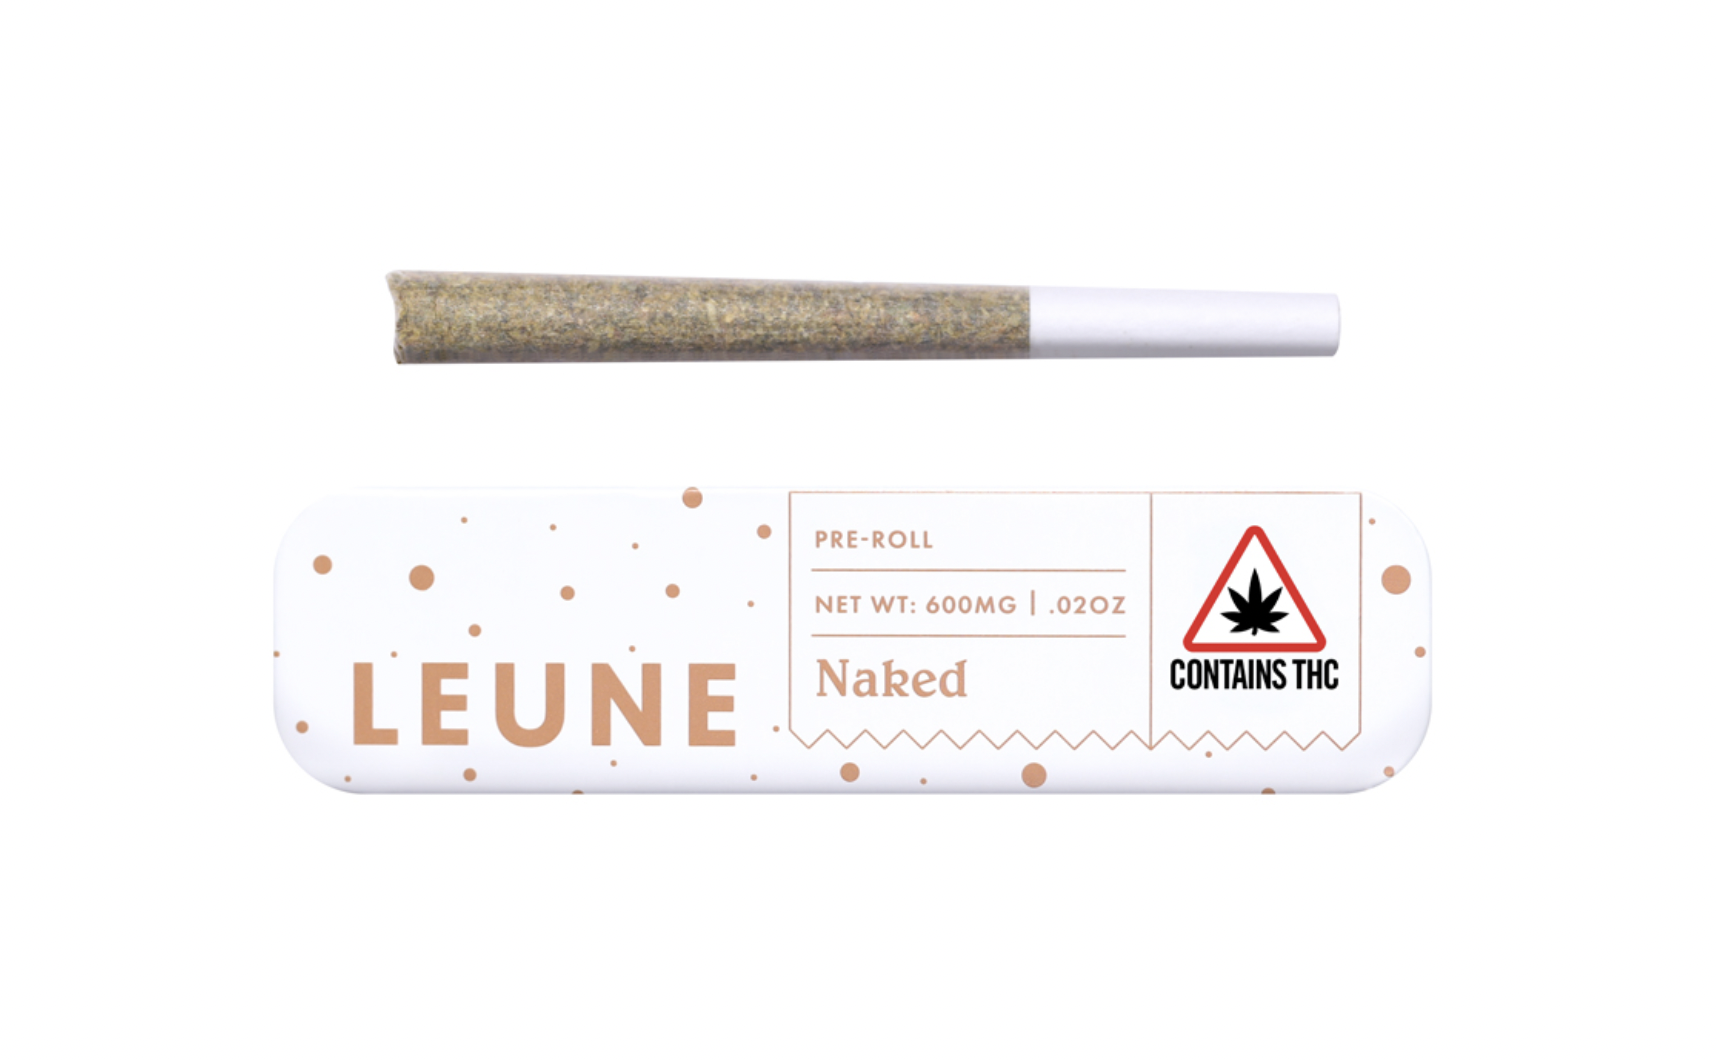 LEUNE Naked Cannabis Pre-Roll